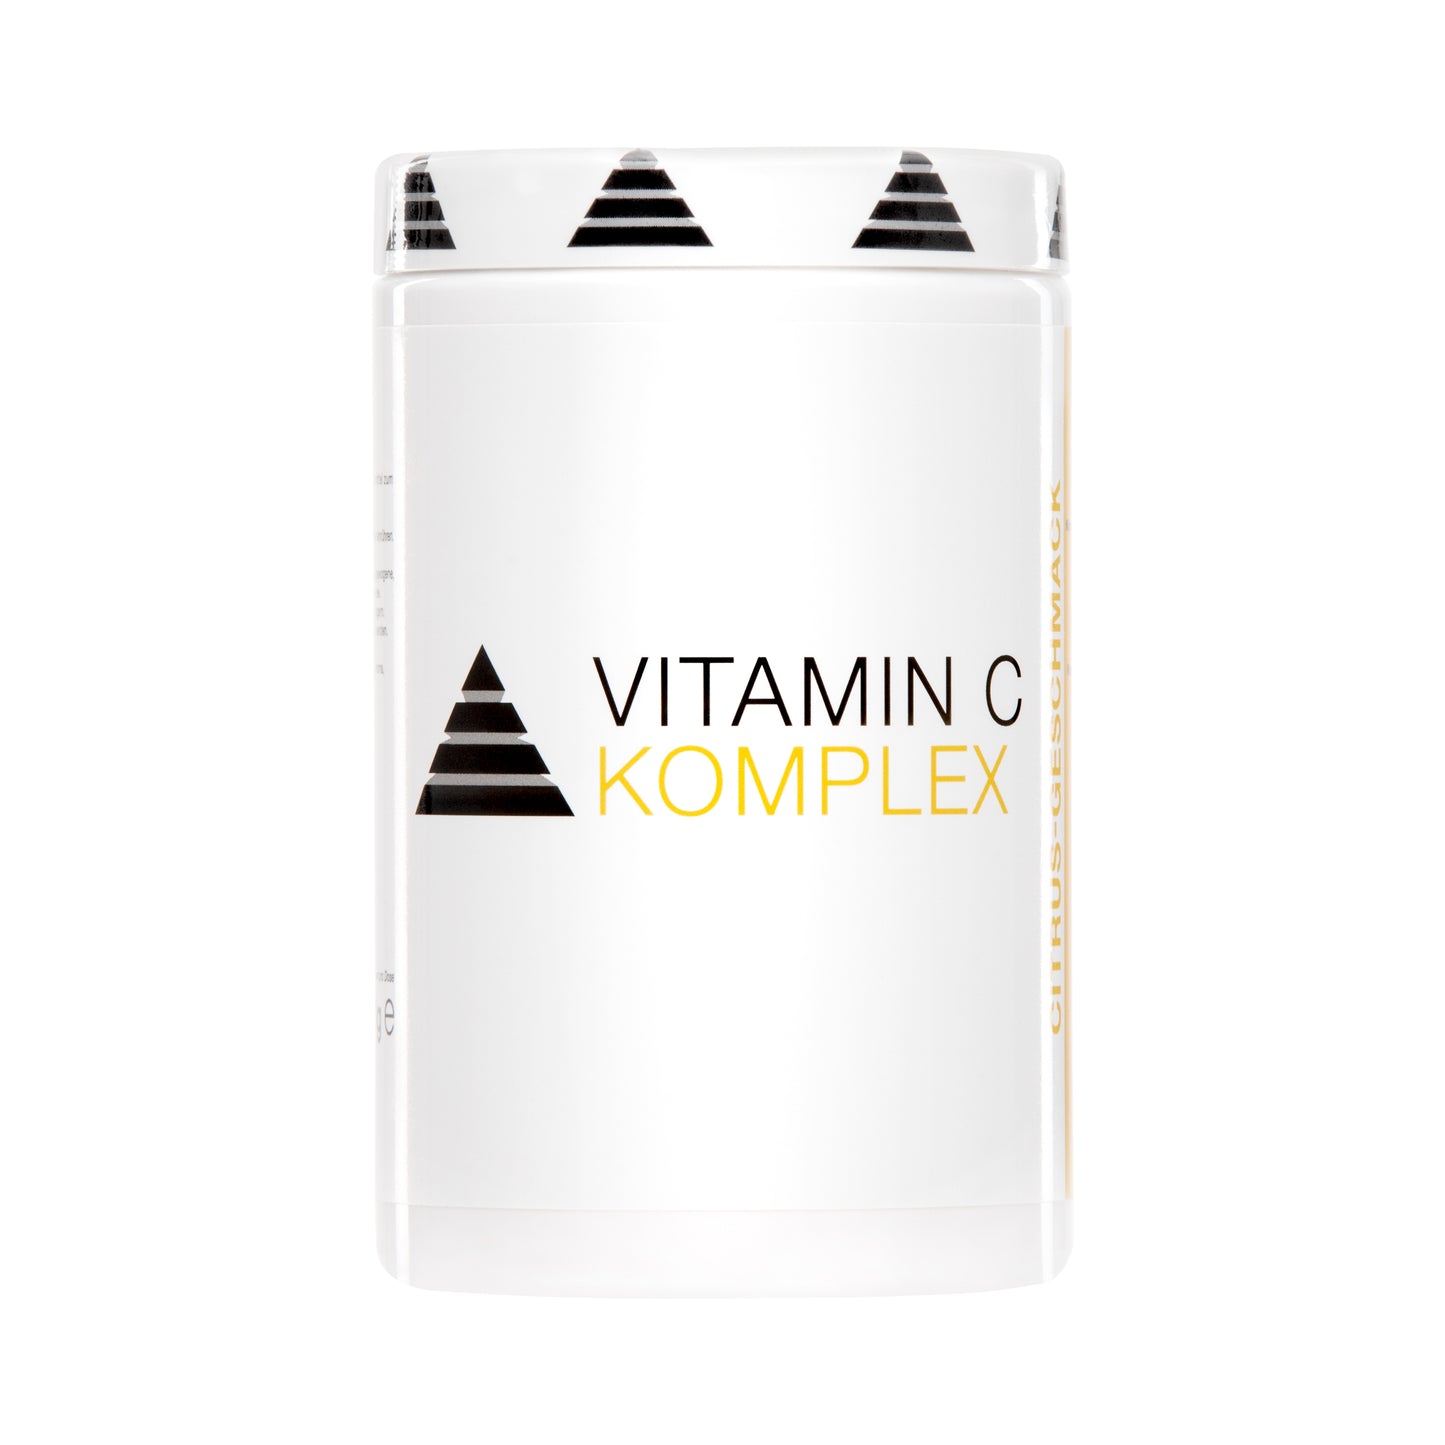 YPSI Vitamin C Komplex